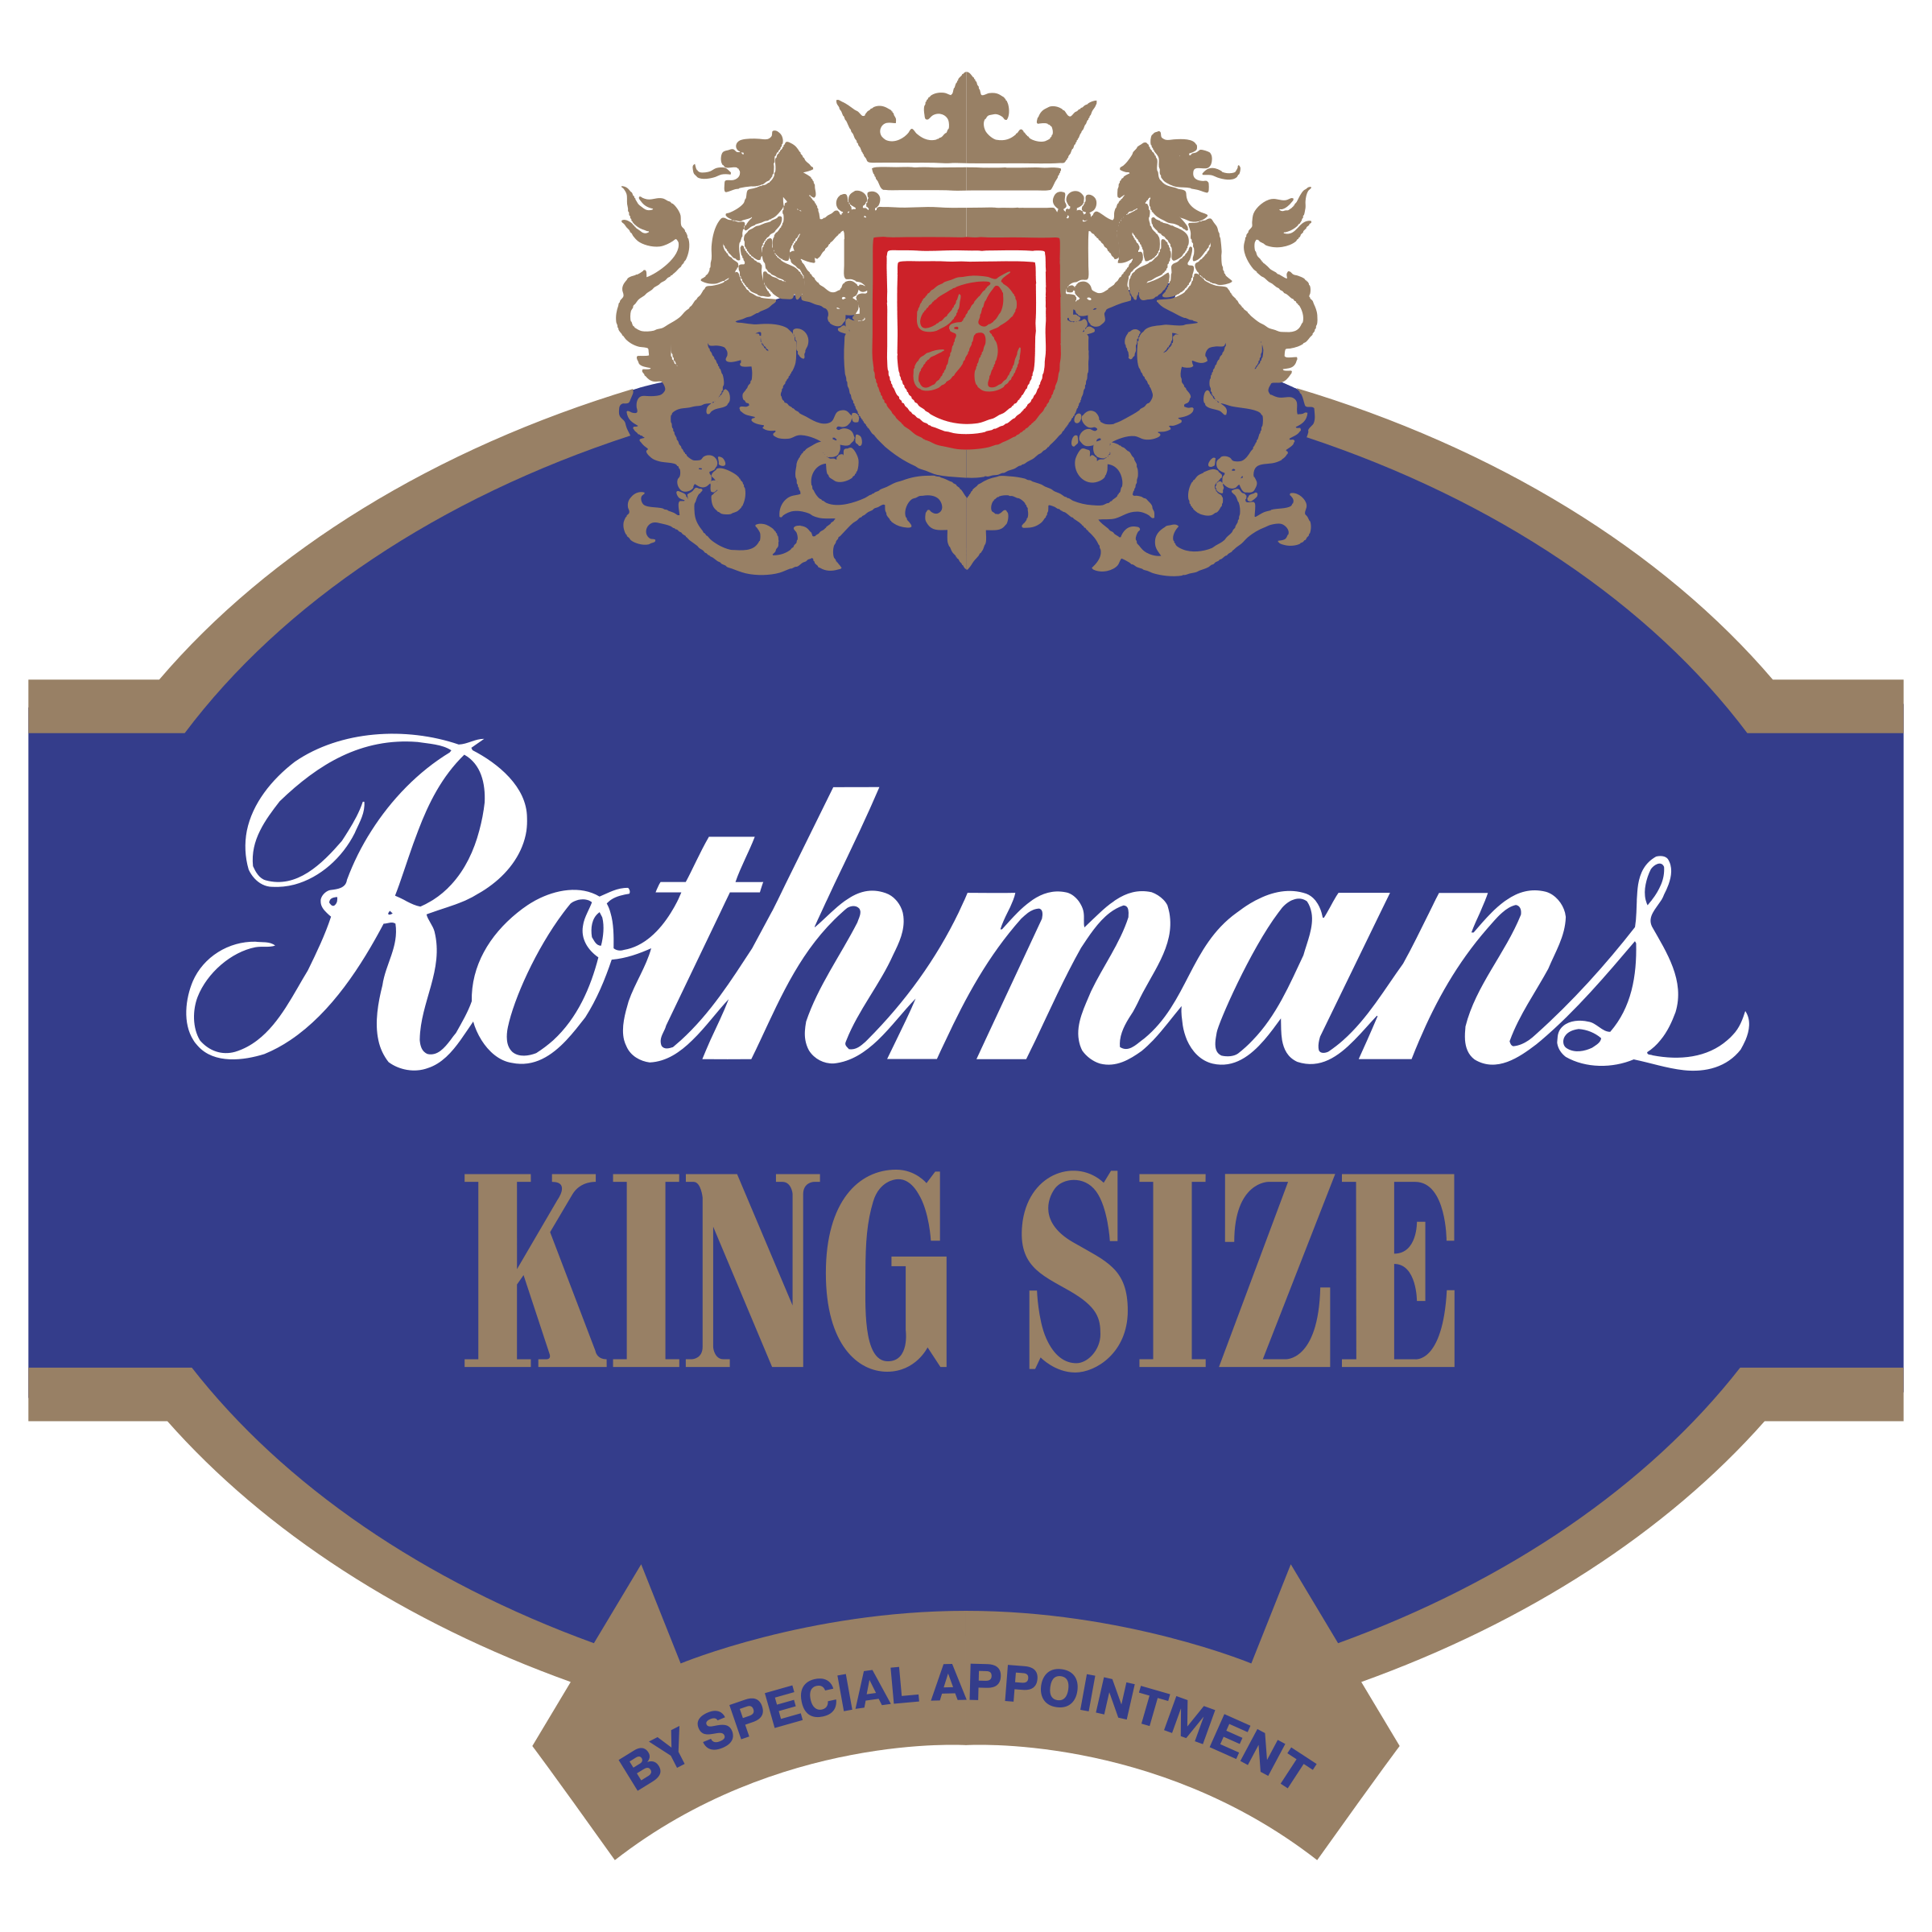 Rothmans Logo - Rothmans Logo PNG Transparent & SVG Vector - Freebie Supply